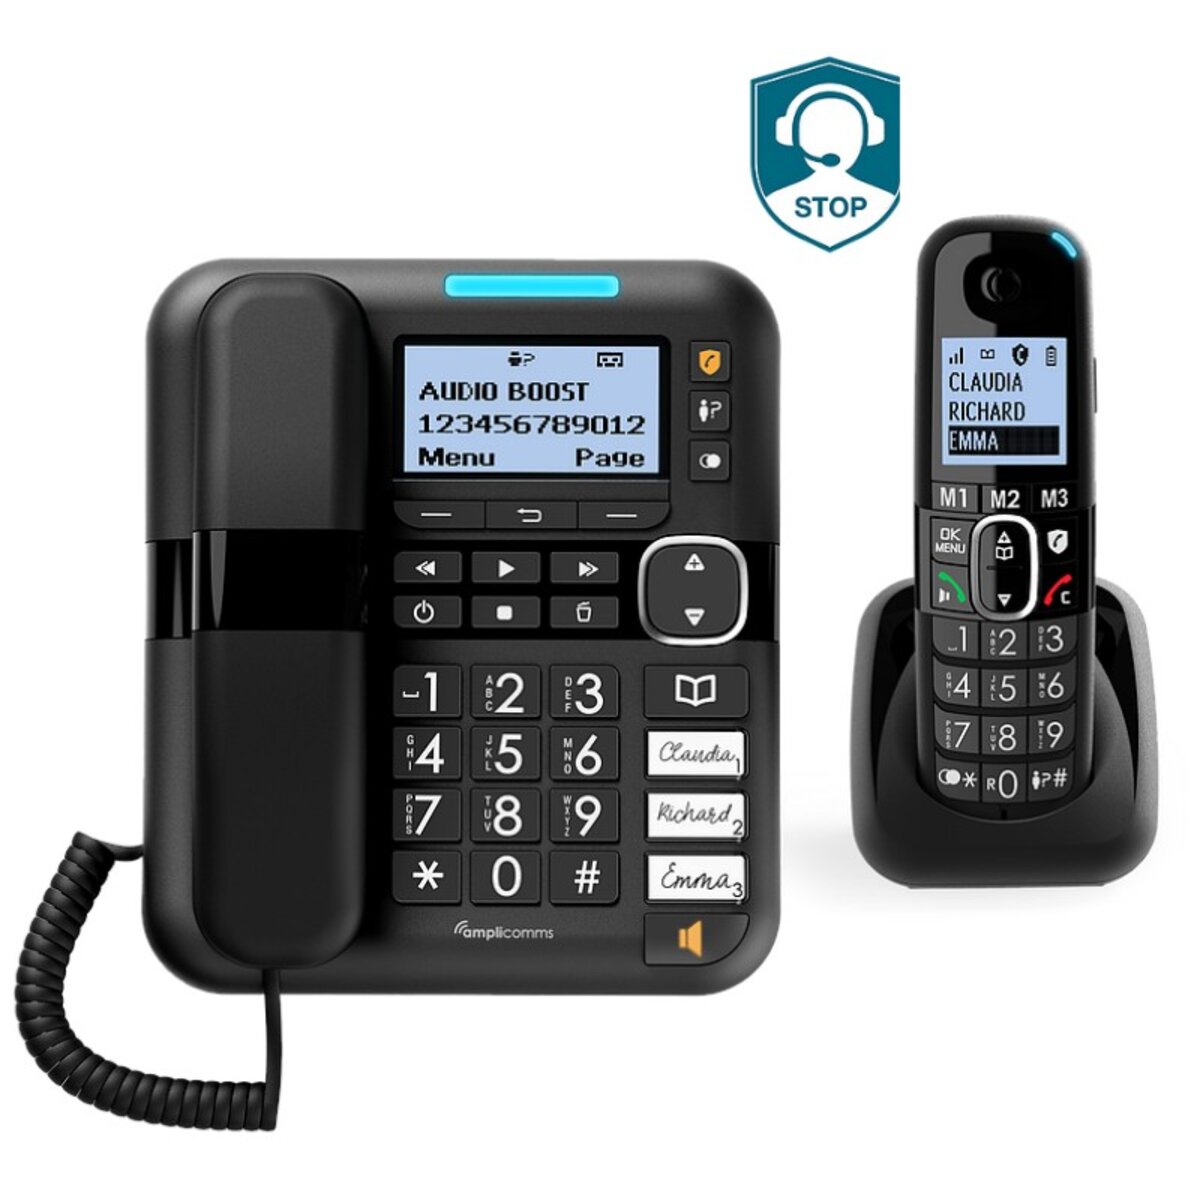 Téléphone Fixe Filaire LEBOSS HCD3588TSD L-12A Noir - Vente en Lign